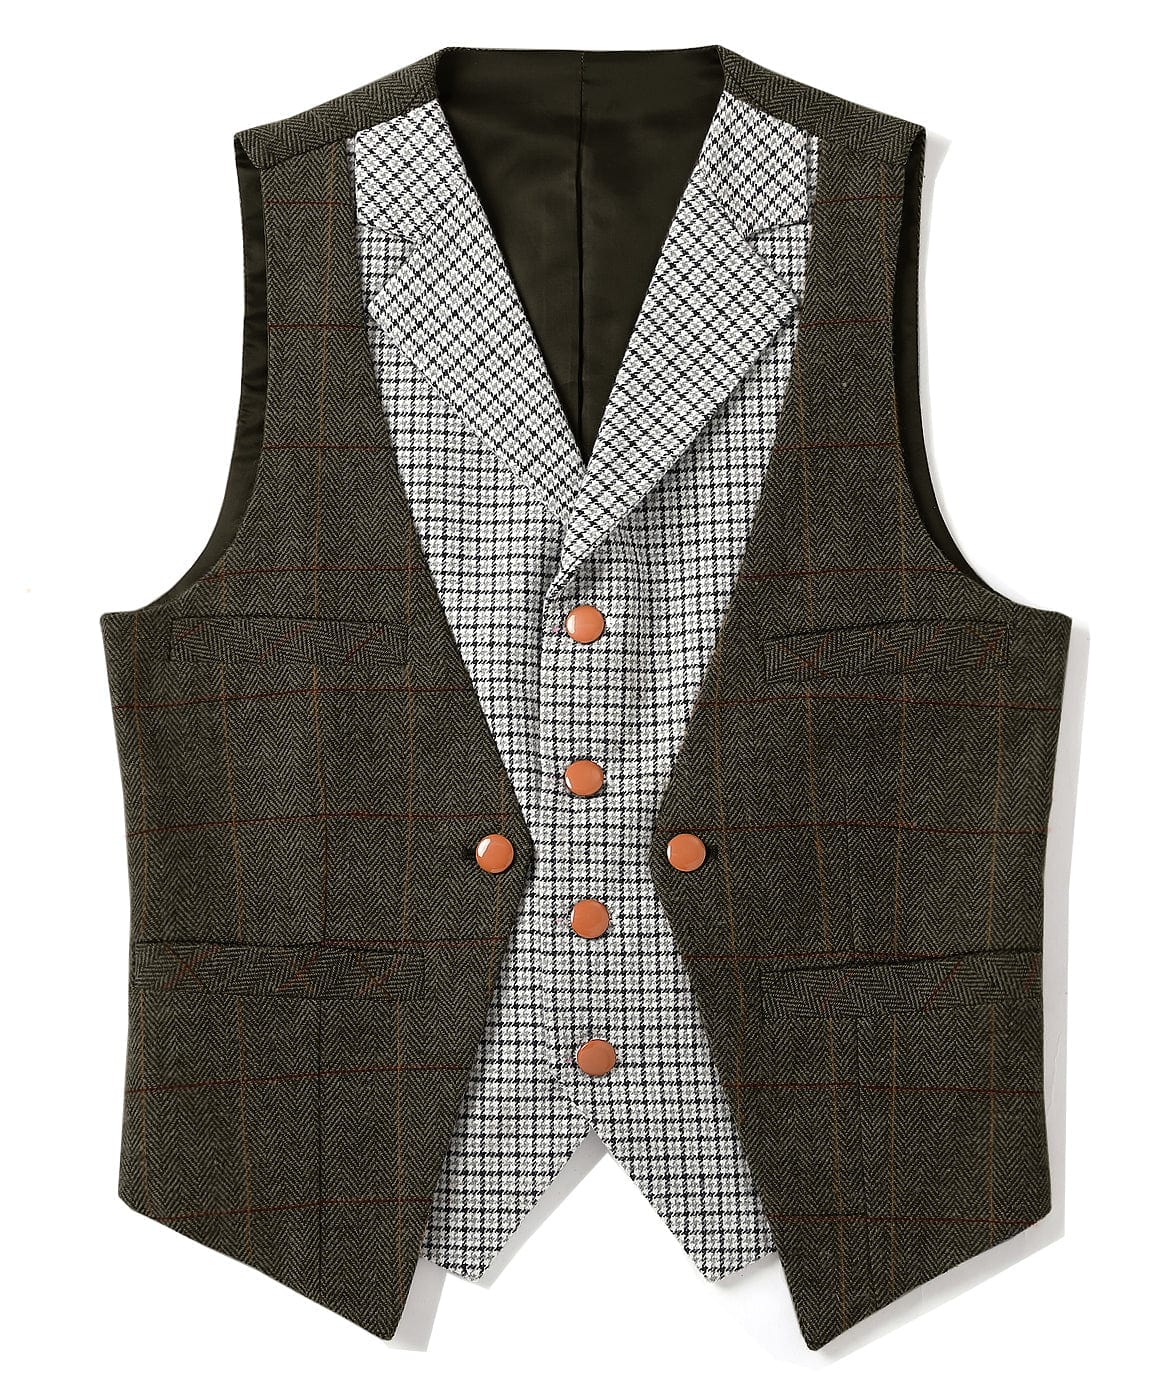 ceehuteey Men's V-Neck Herringbone Suit Vests Fashion Formal Slim Fit